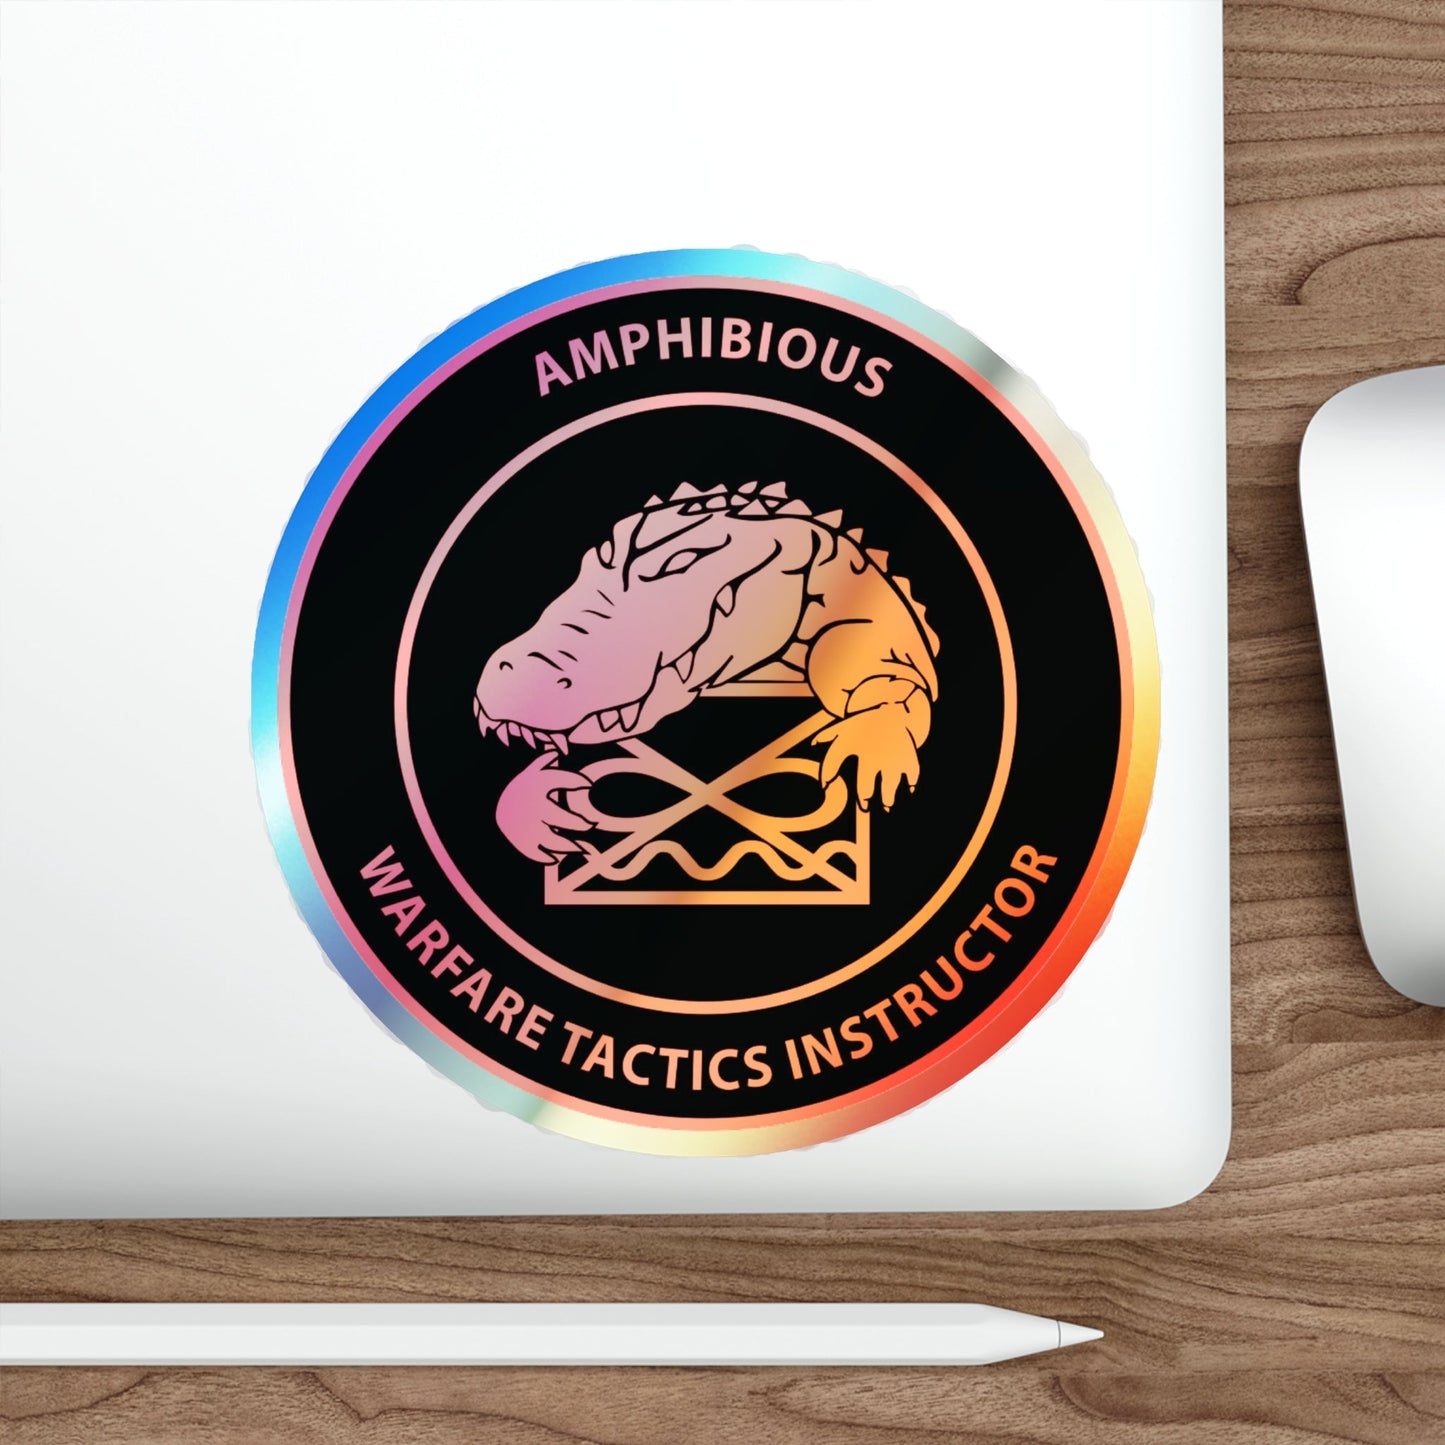 Amphibious Warfare Tactics Instructor AMW WTI (U.S. Navy) Holographic STICKER Die-Cut Vinyl Decal-The Sticker Space